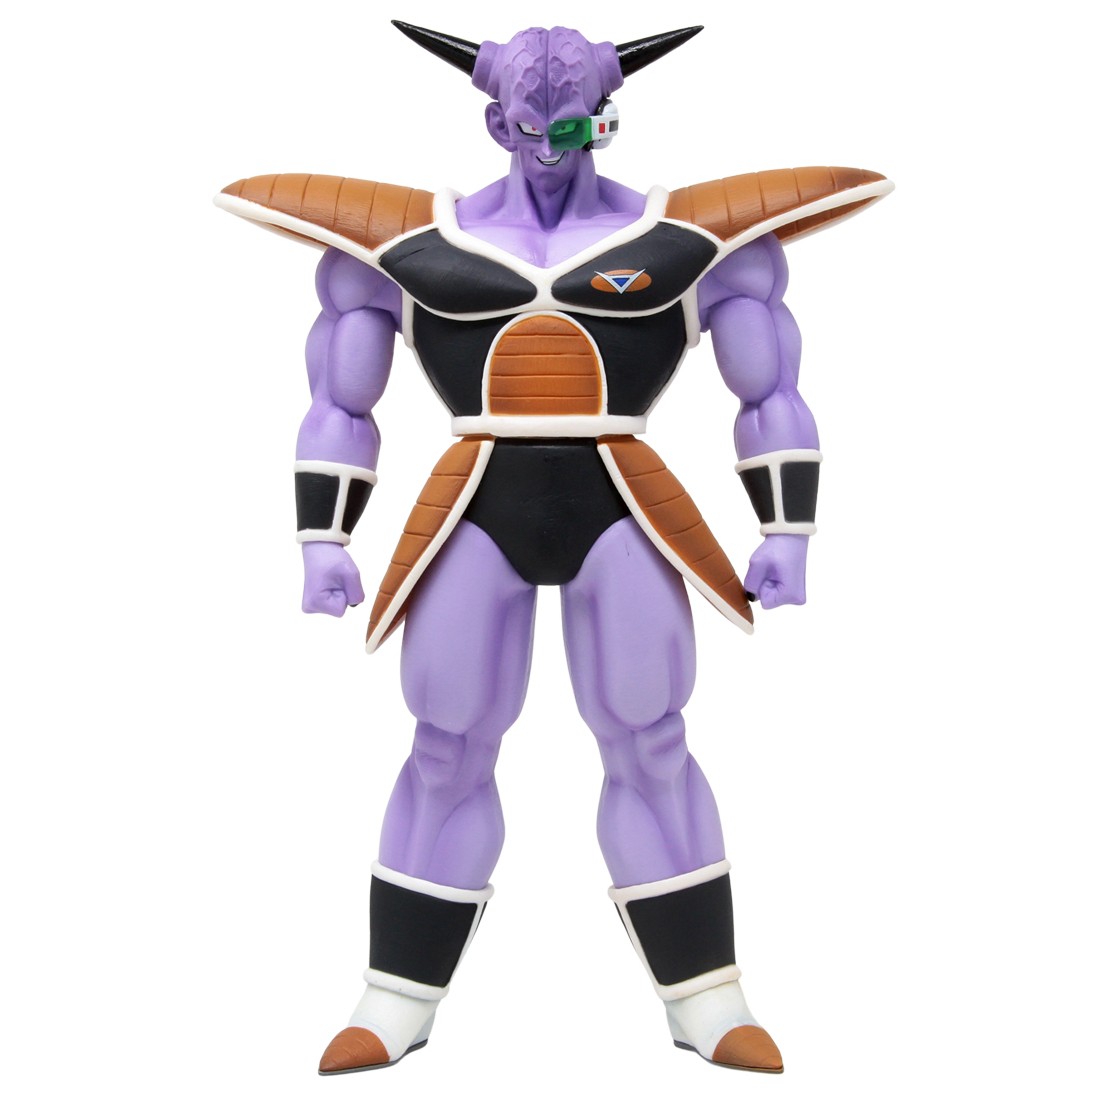 Bandai Ichibansho The Ginyu Force! Dragon Ball Z Captain Ginyu Figure (purple)